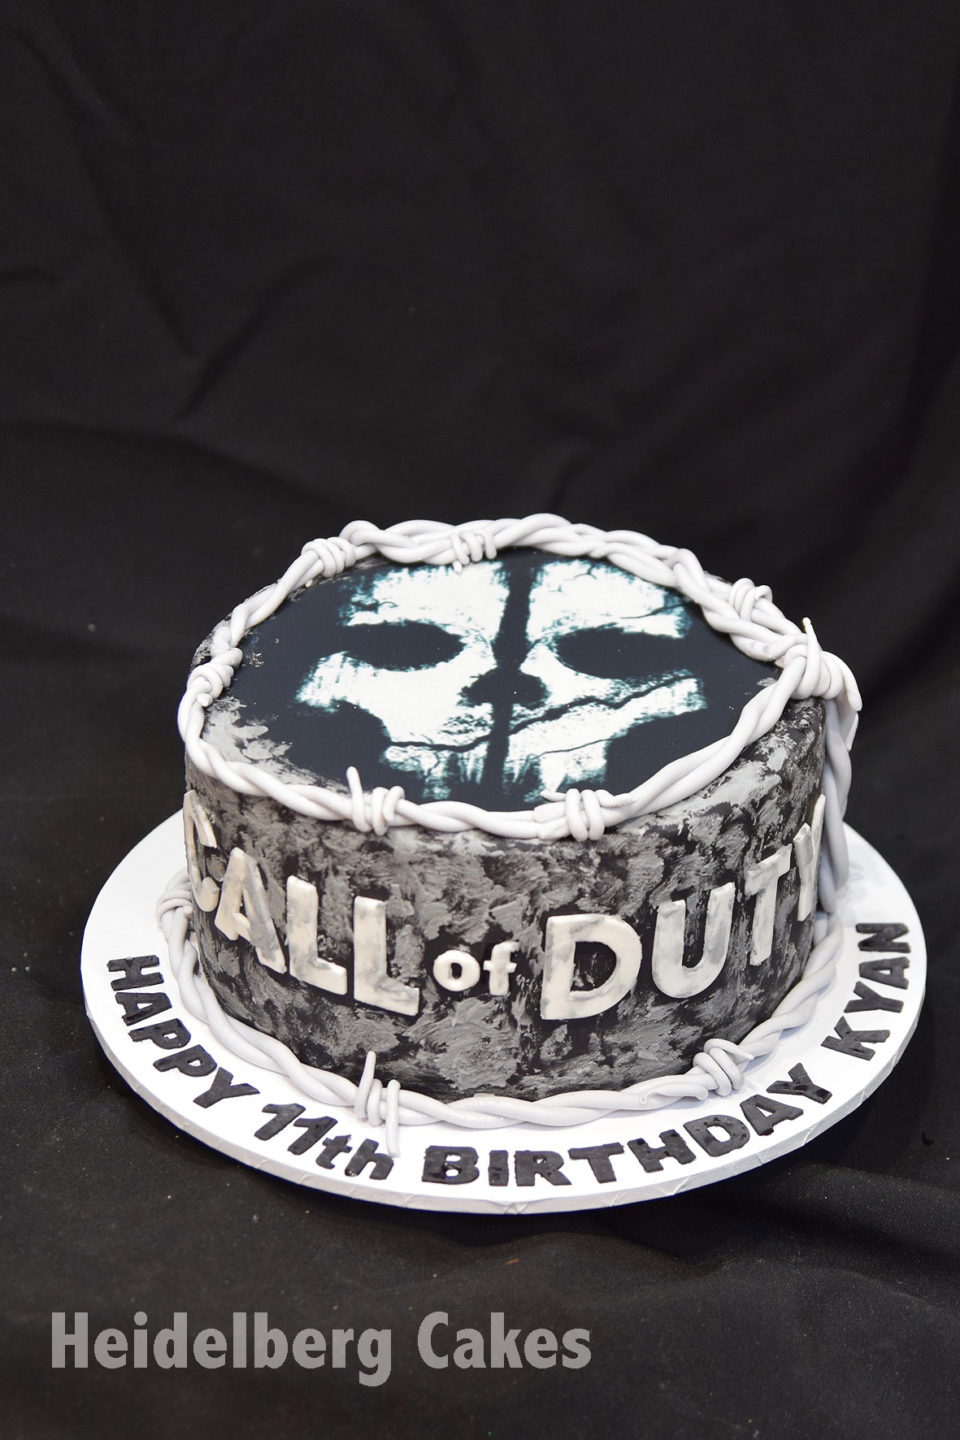 79 Cakes - Call of Duty ideas | call of duty, call of duty cakes, cake